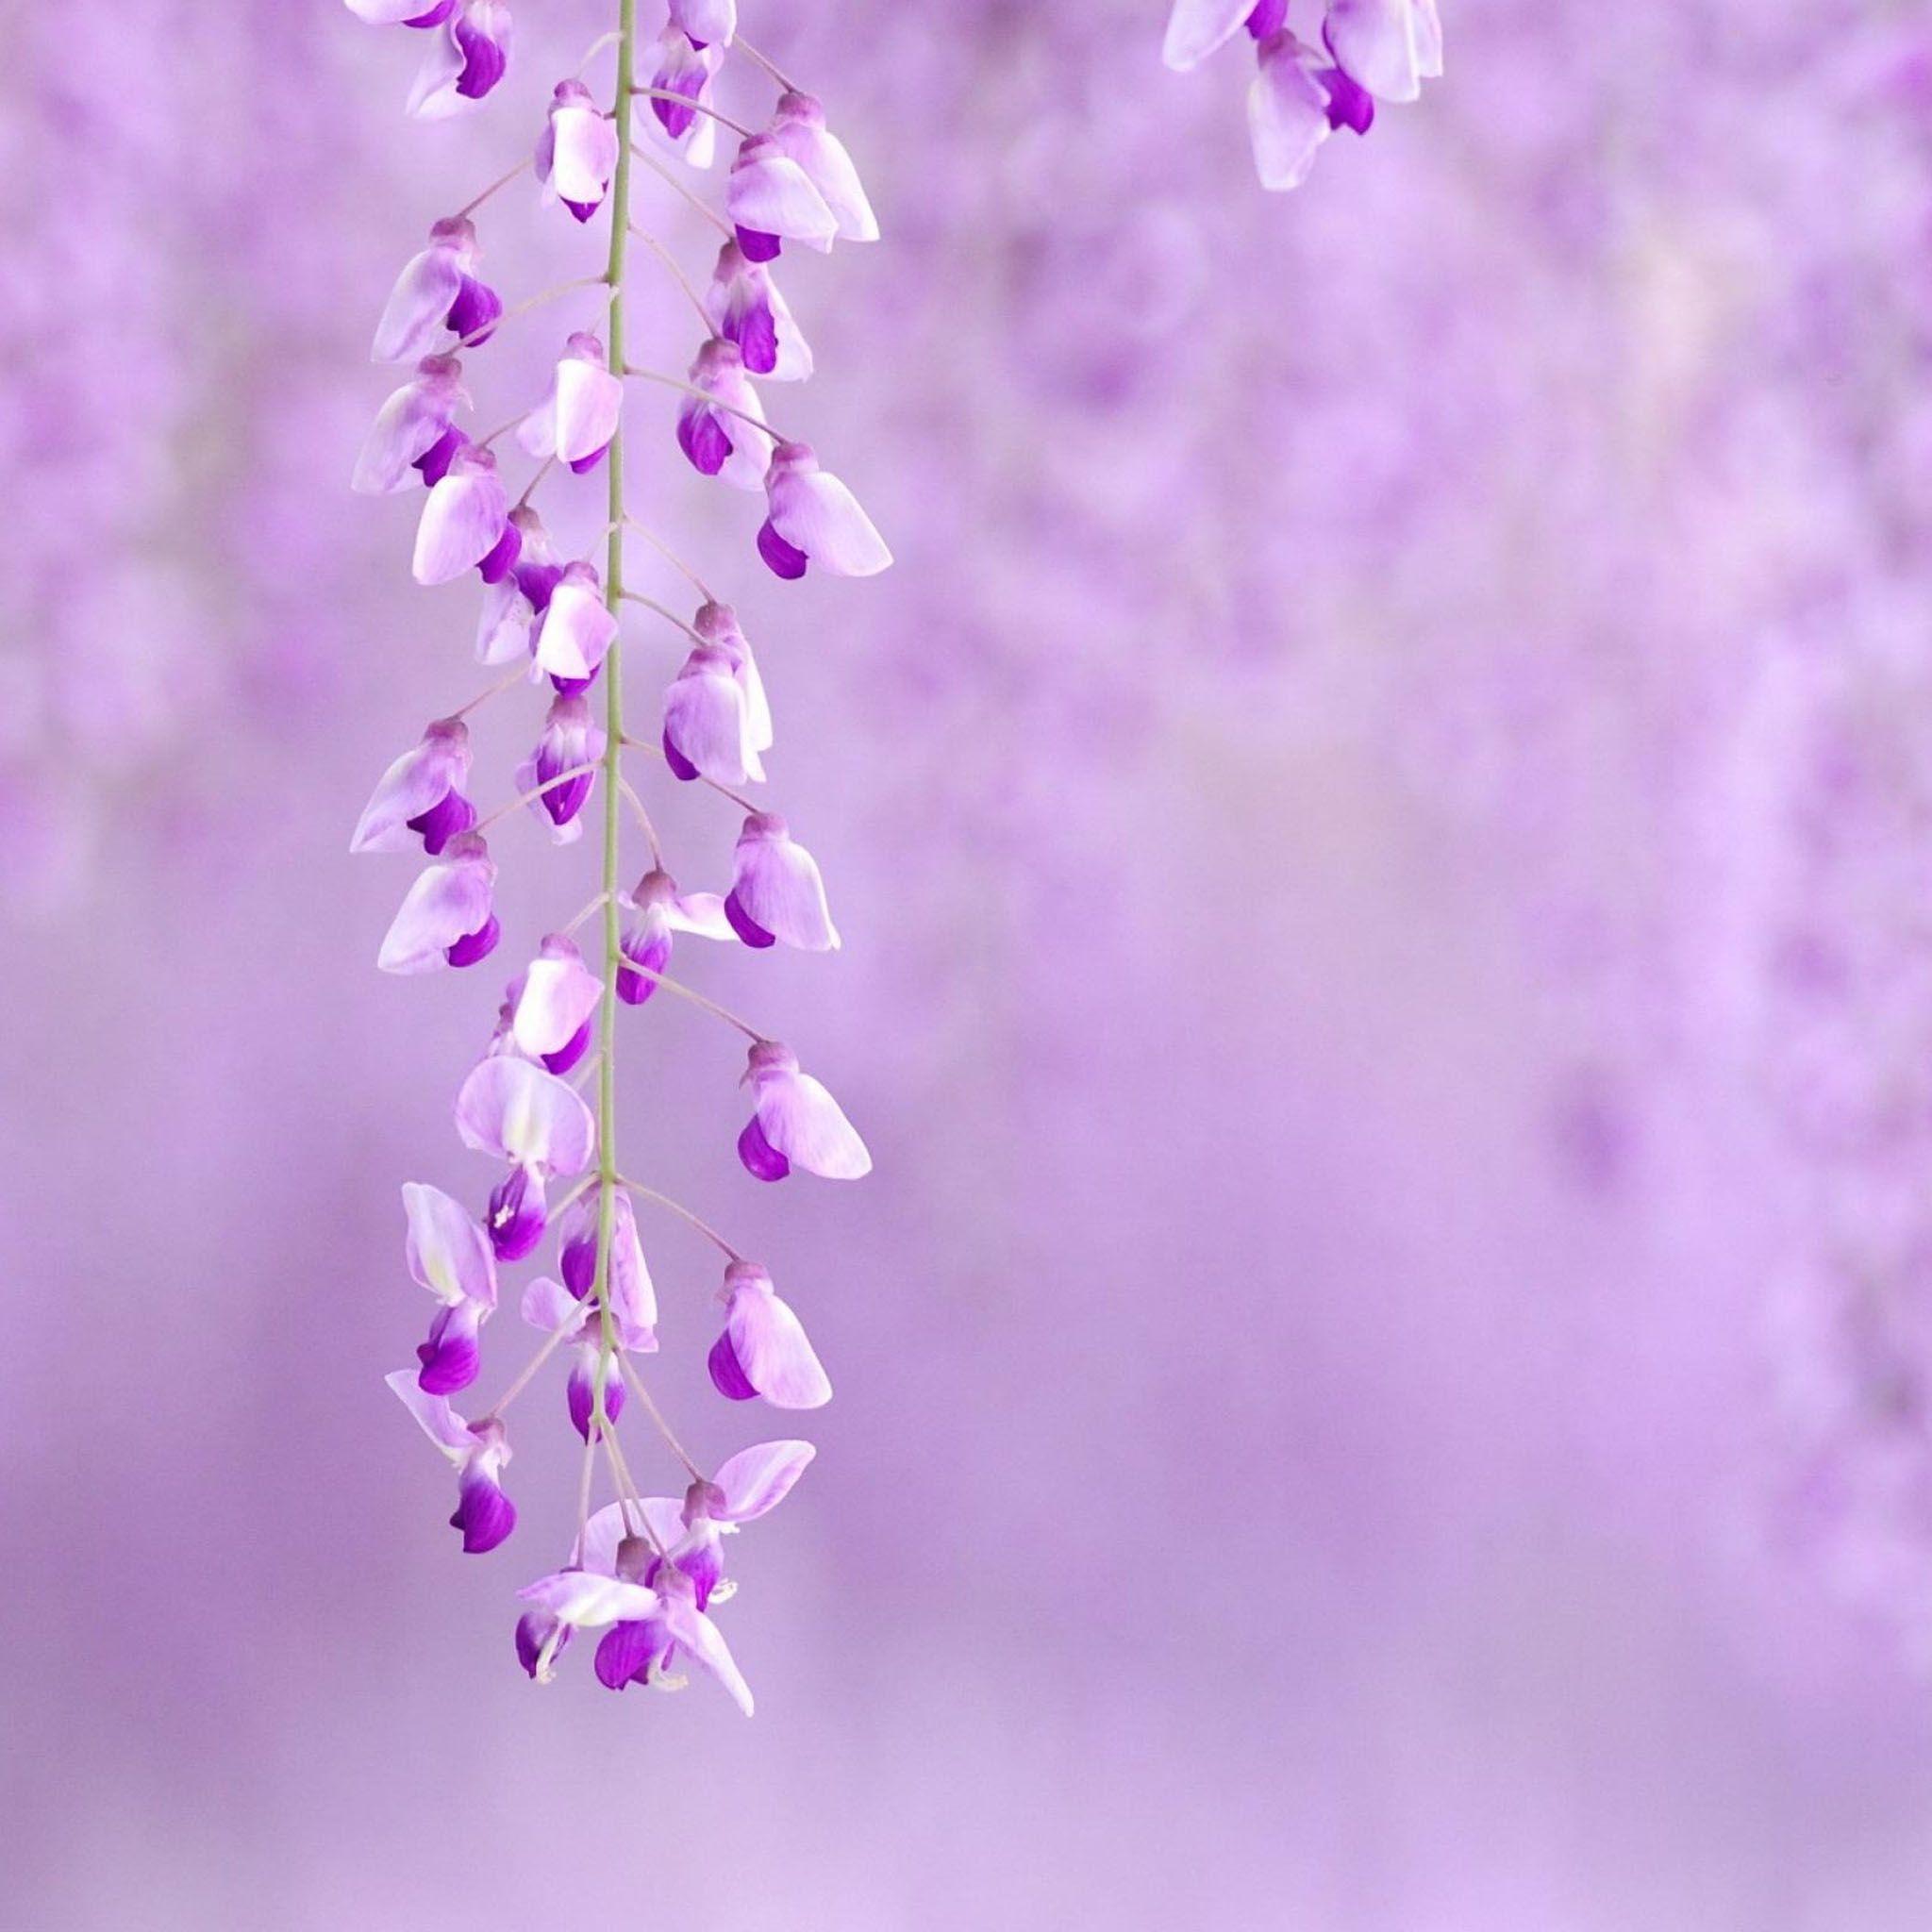 Purple Flower Backgrounds Light Purple Flower Background Hd 2048x2048 Wallpaper Teahub Io